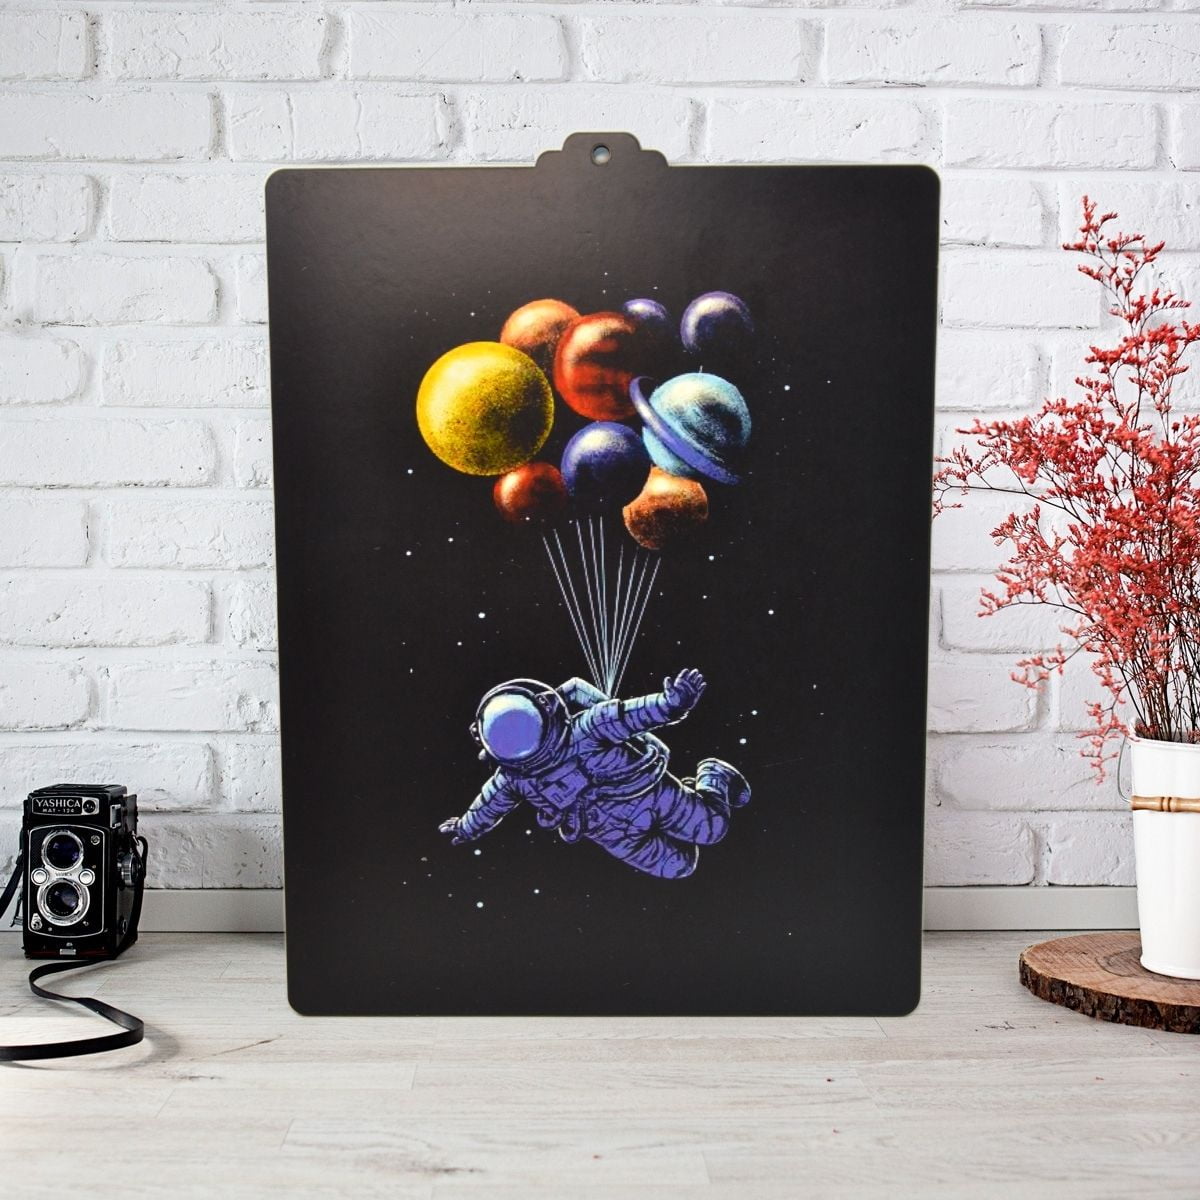 Balonlu astranot tablo 2 - balonla uçan astronot tablo - figurex